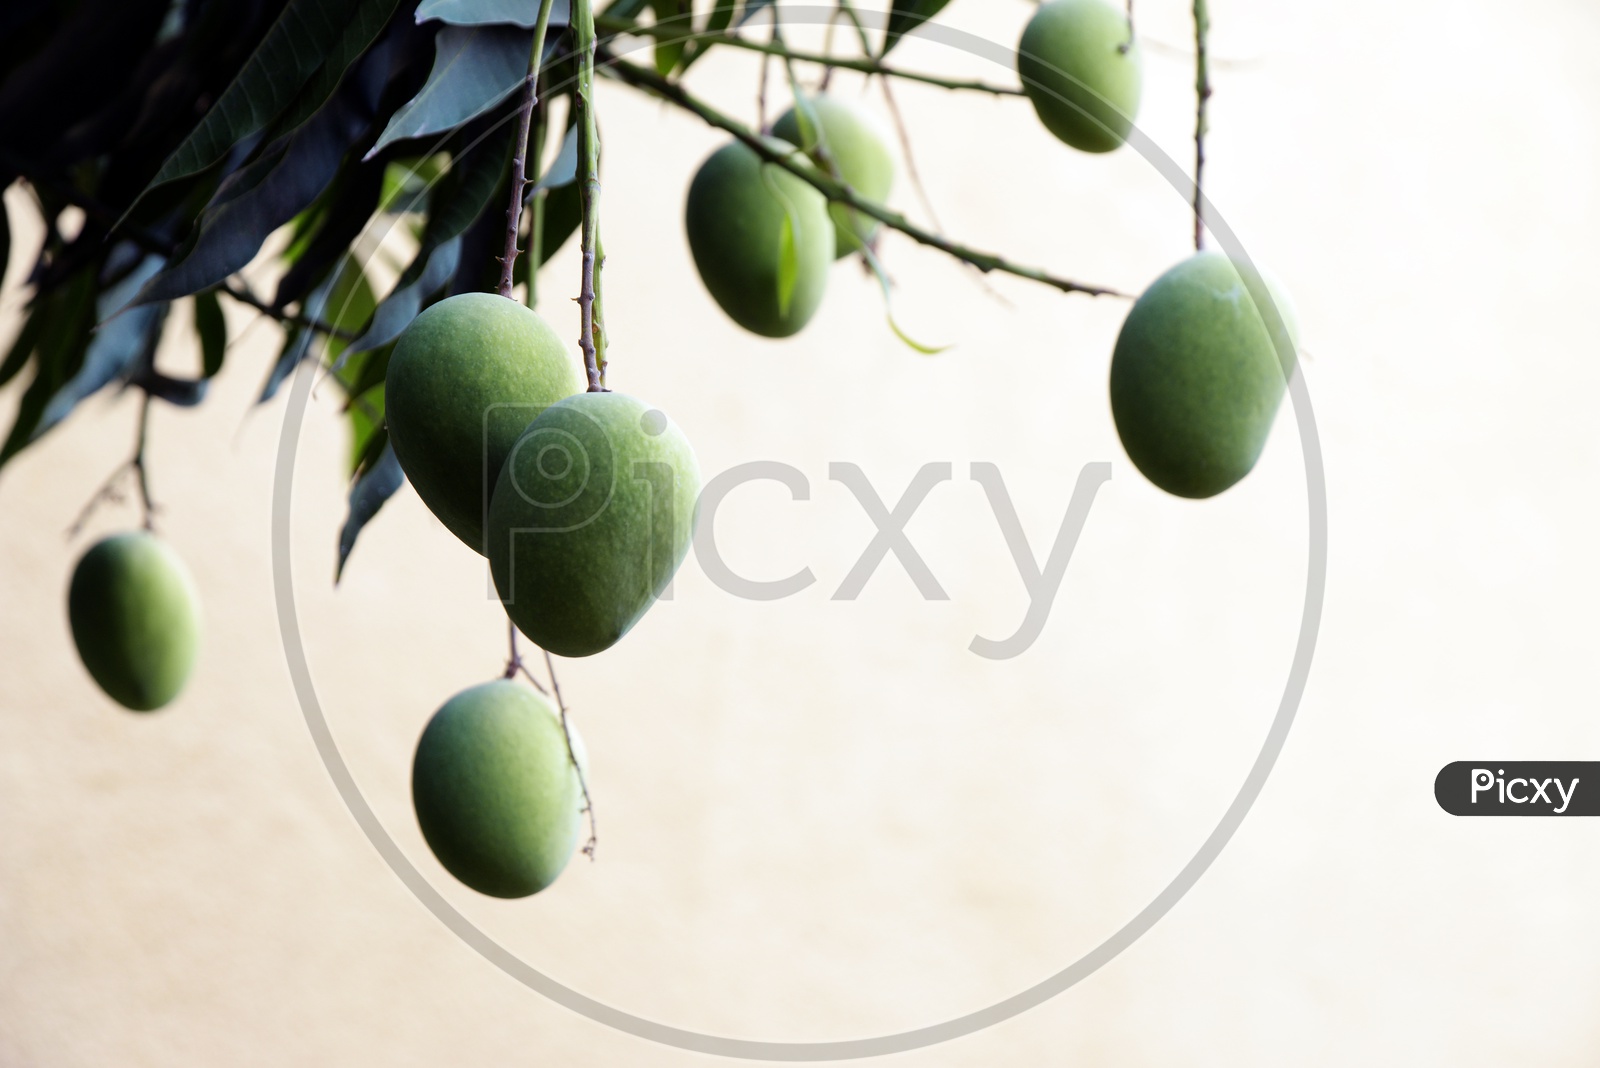 Green mango fruits hanging on a tree